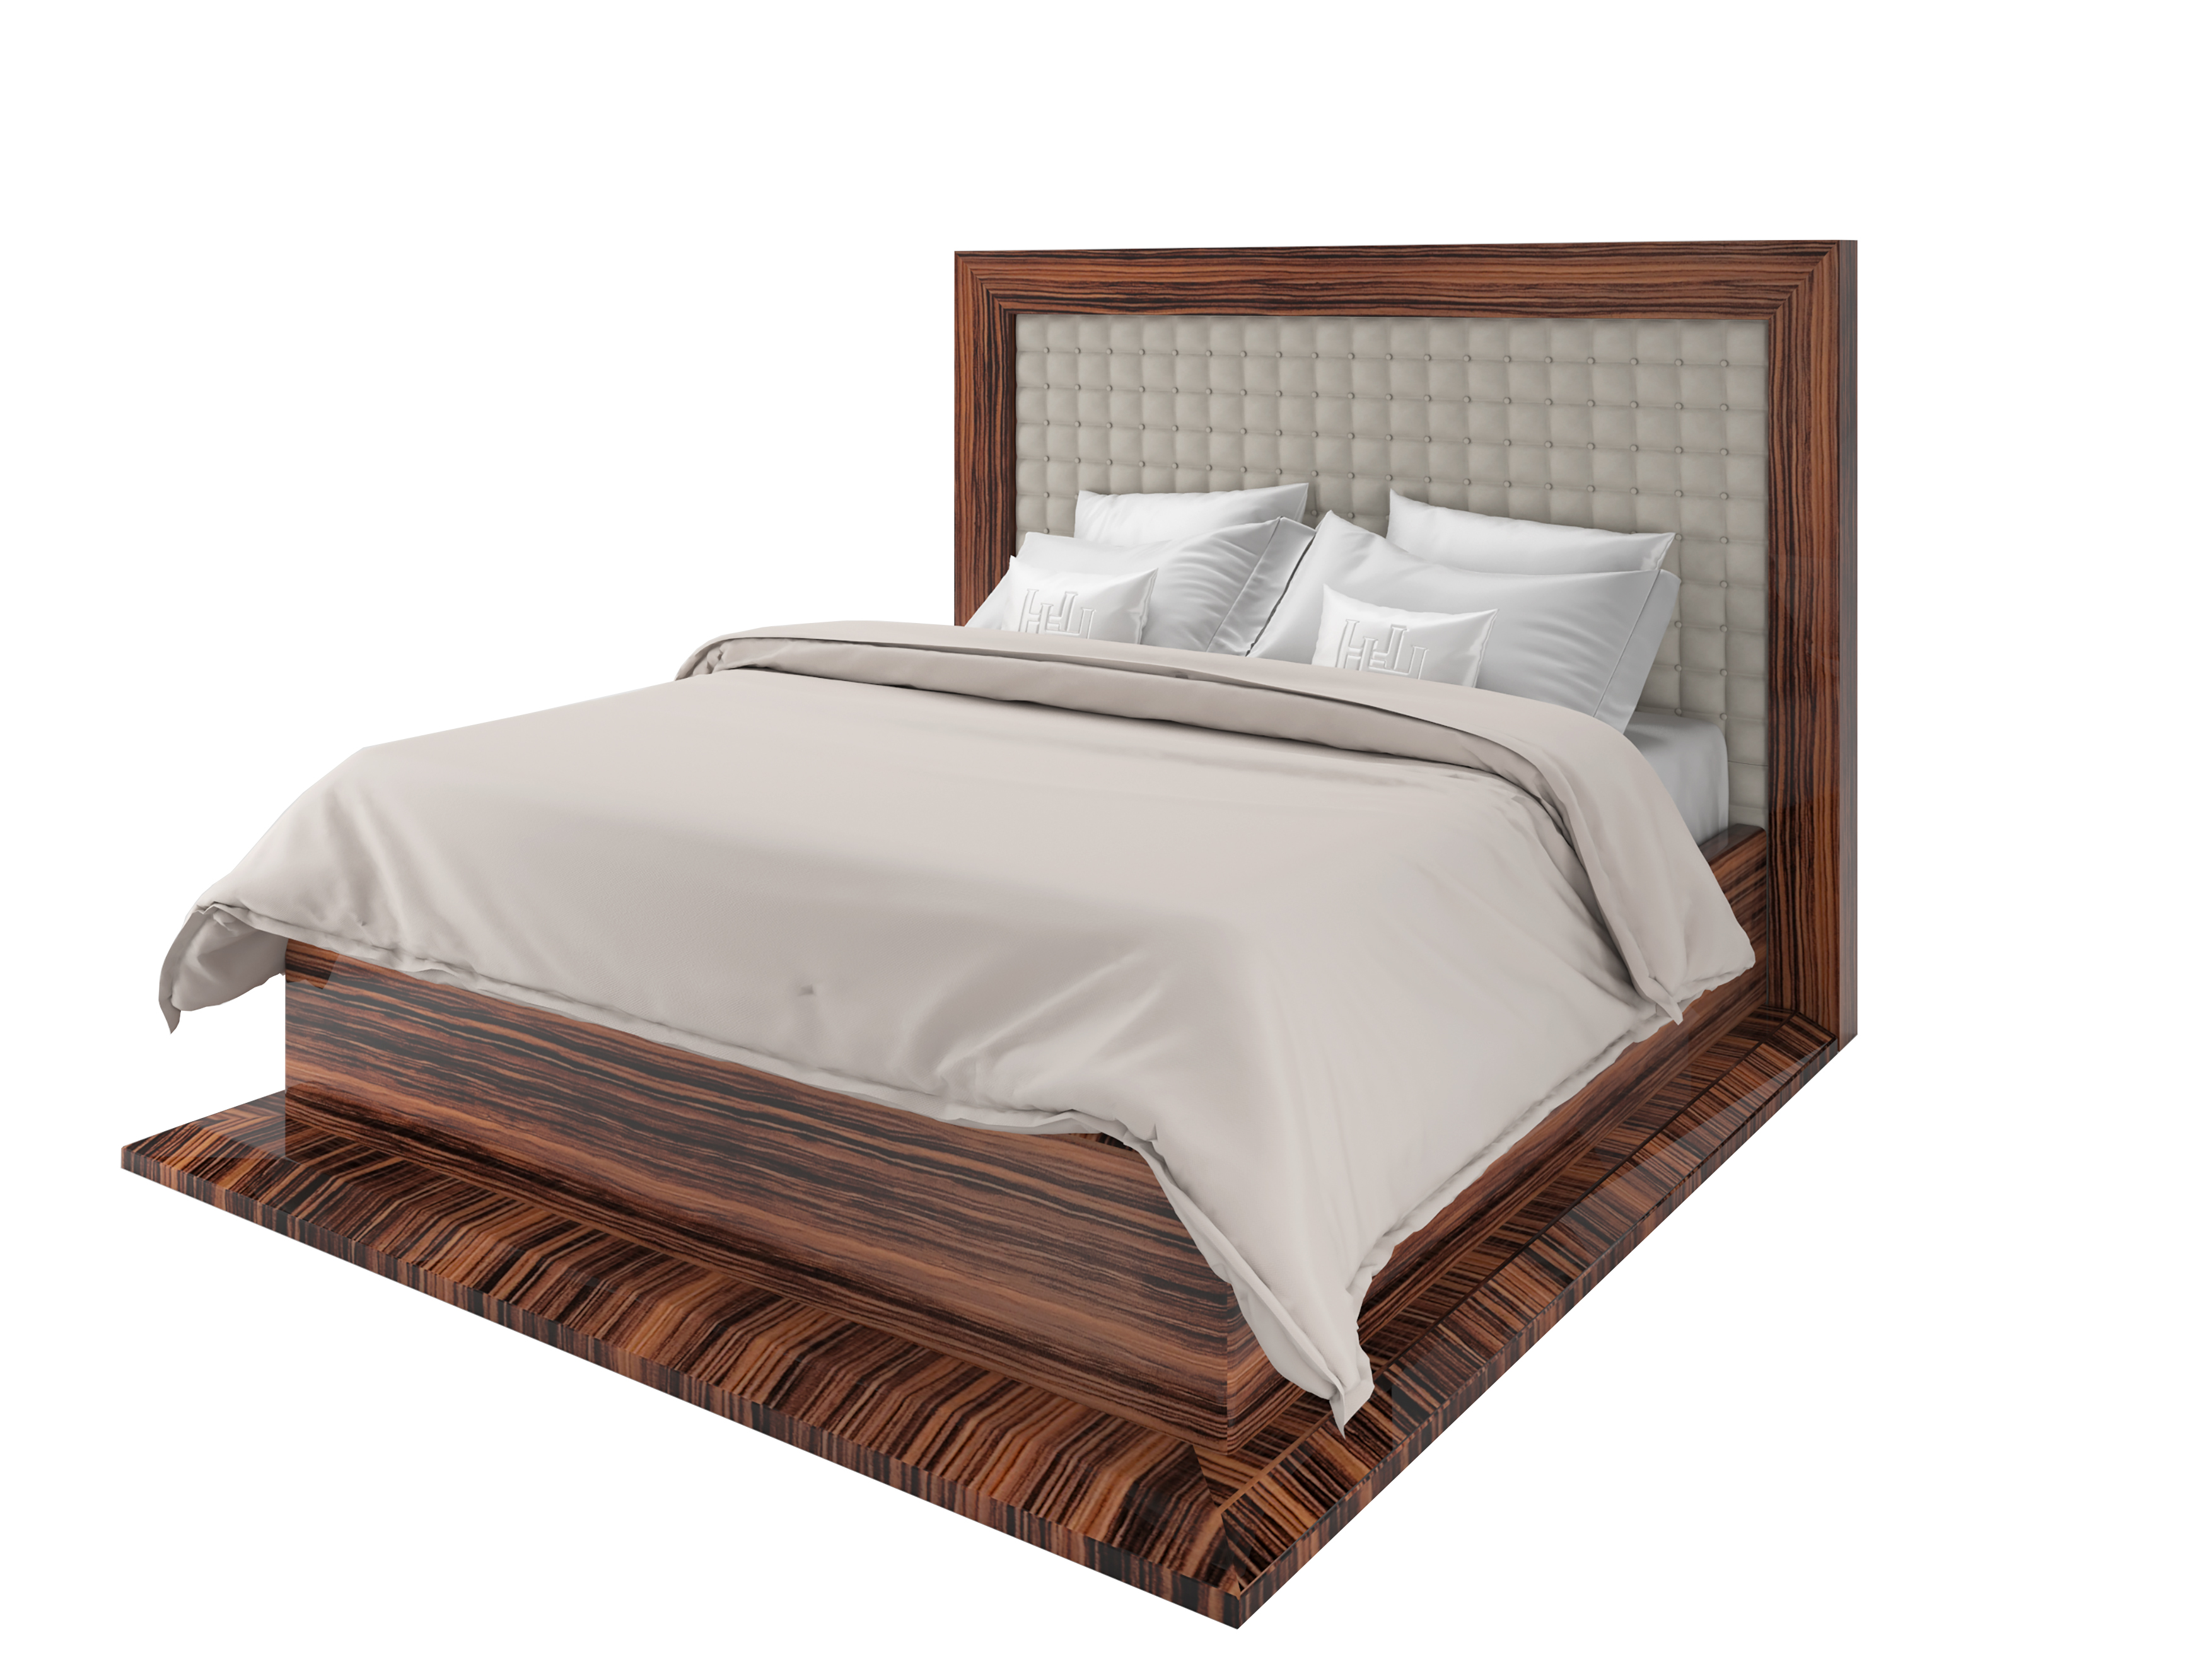 Art Deco Design Macassar Bed Original, Leather And Wood Bed Frame